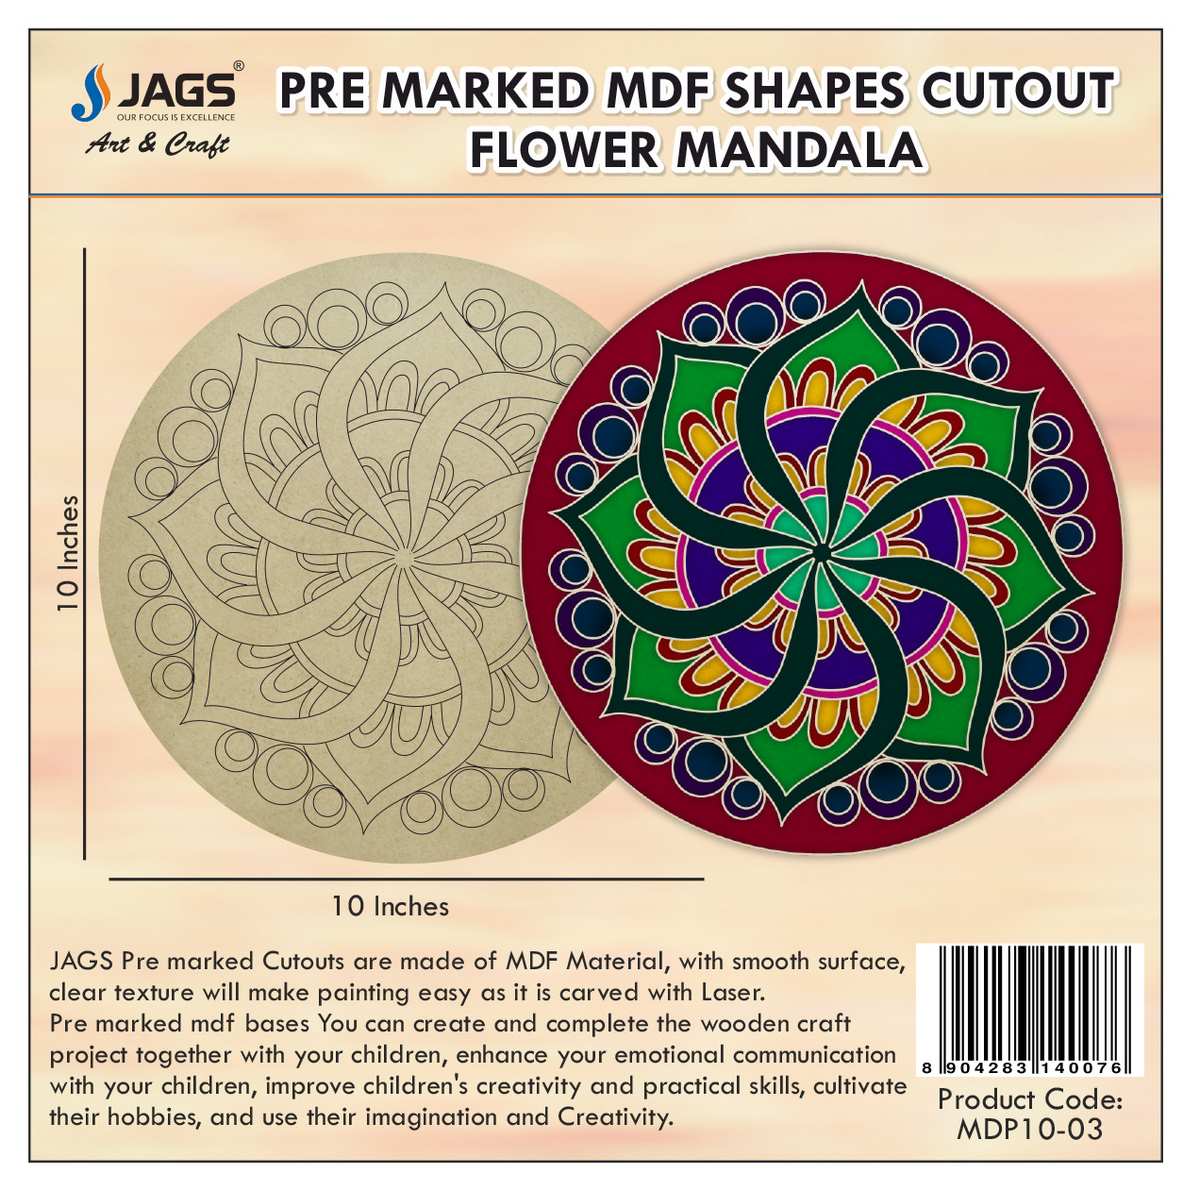 jags-mumbai MDF pre marked MDF shapes cutout flower mandala